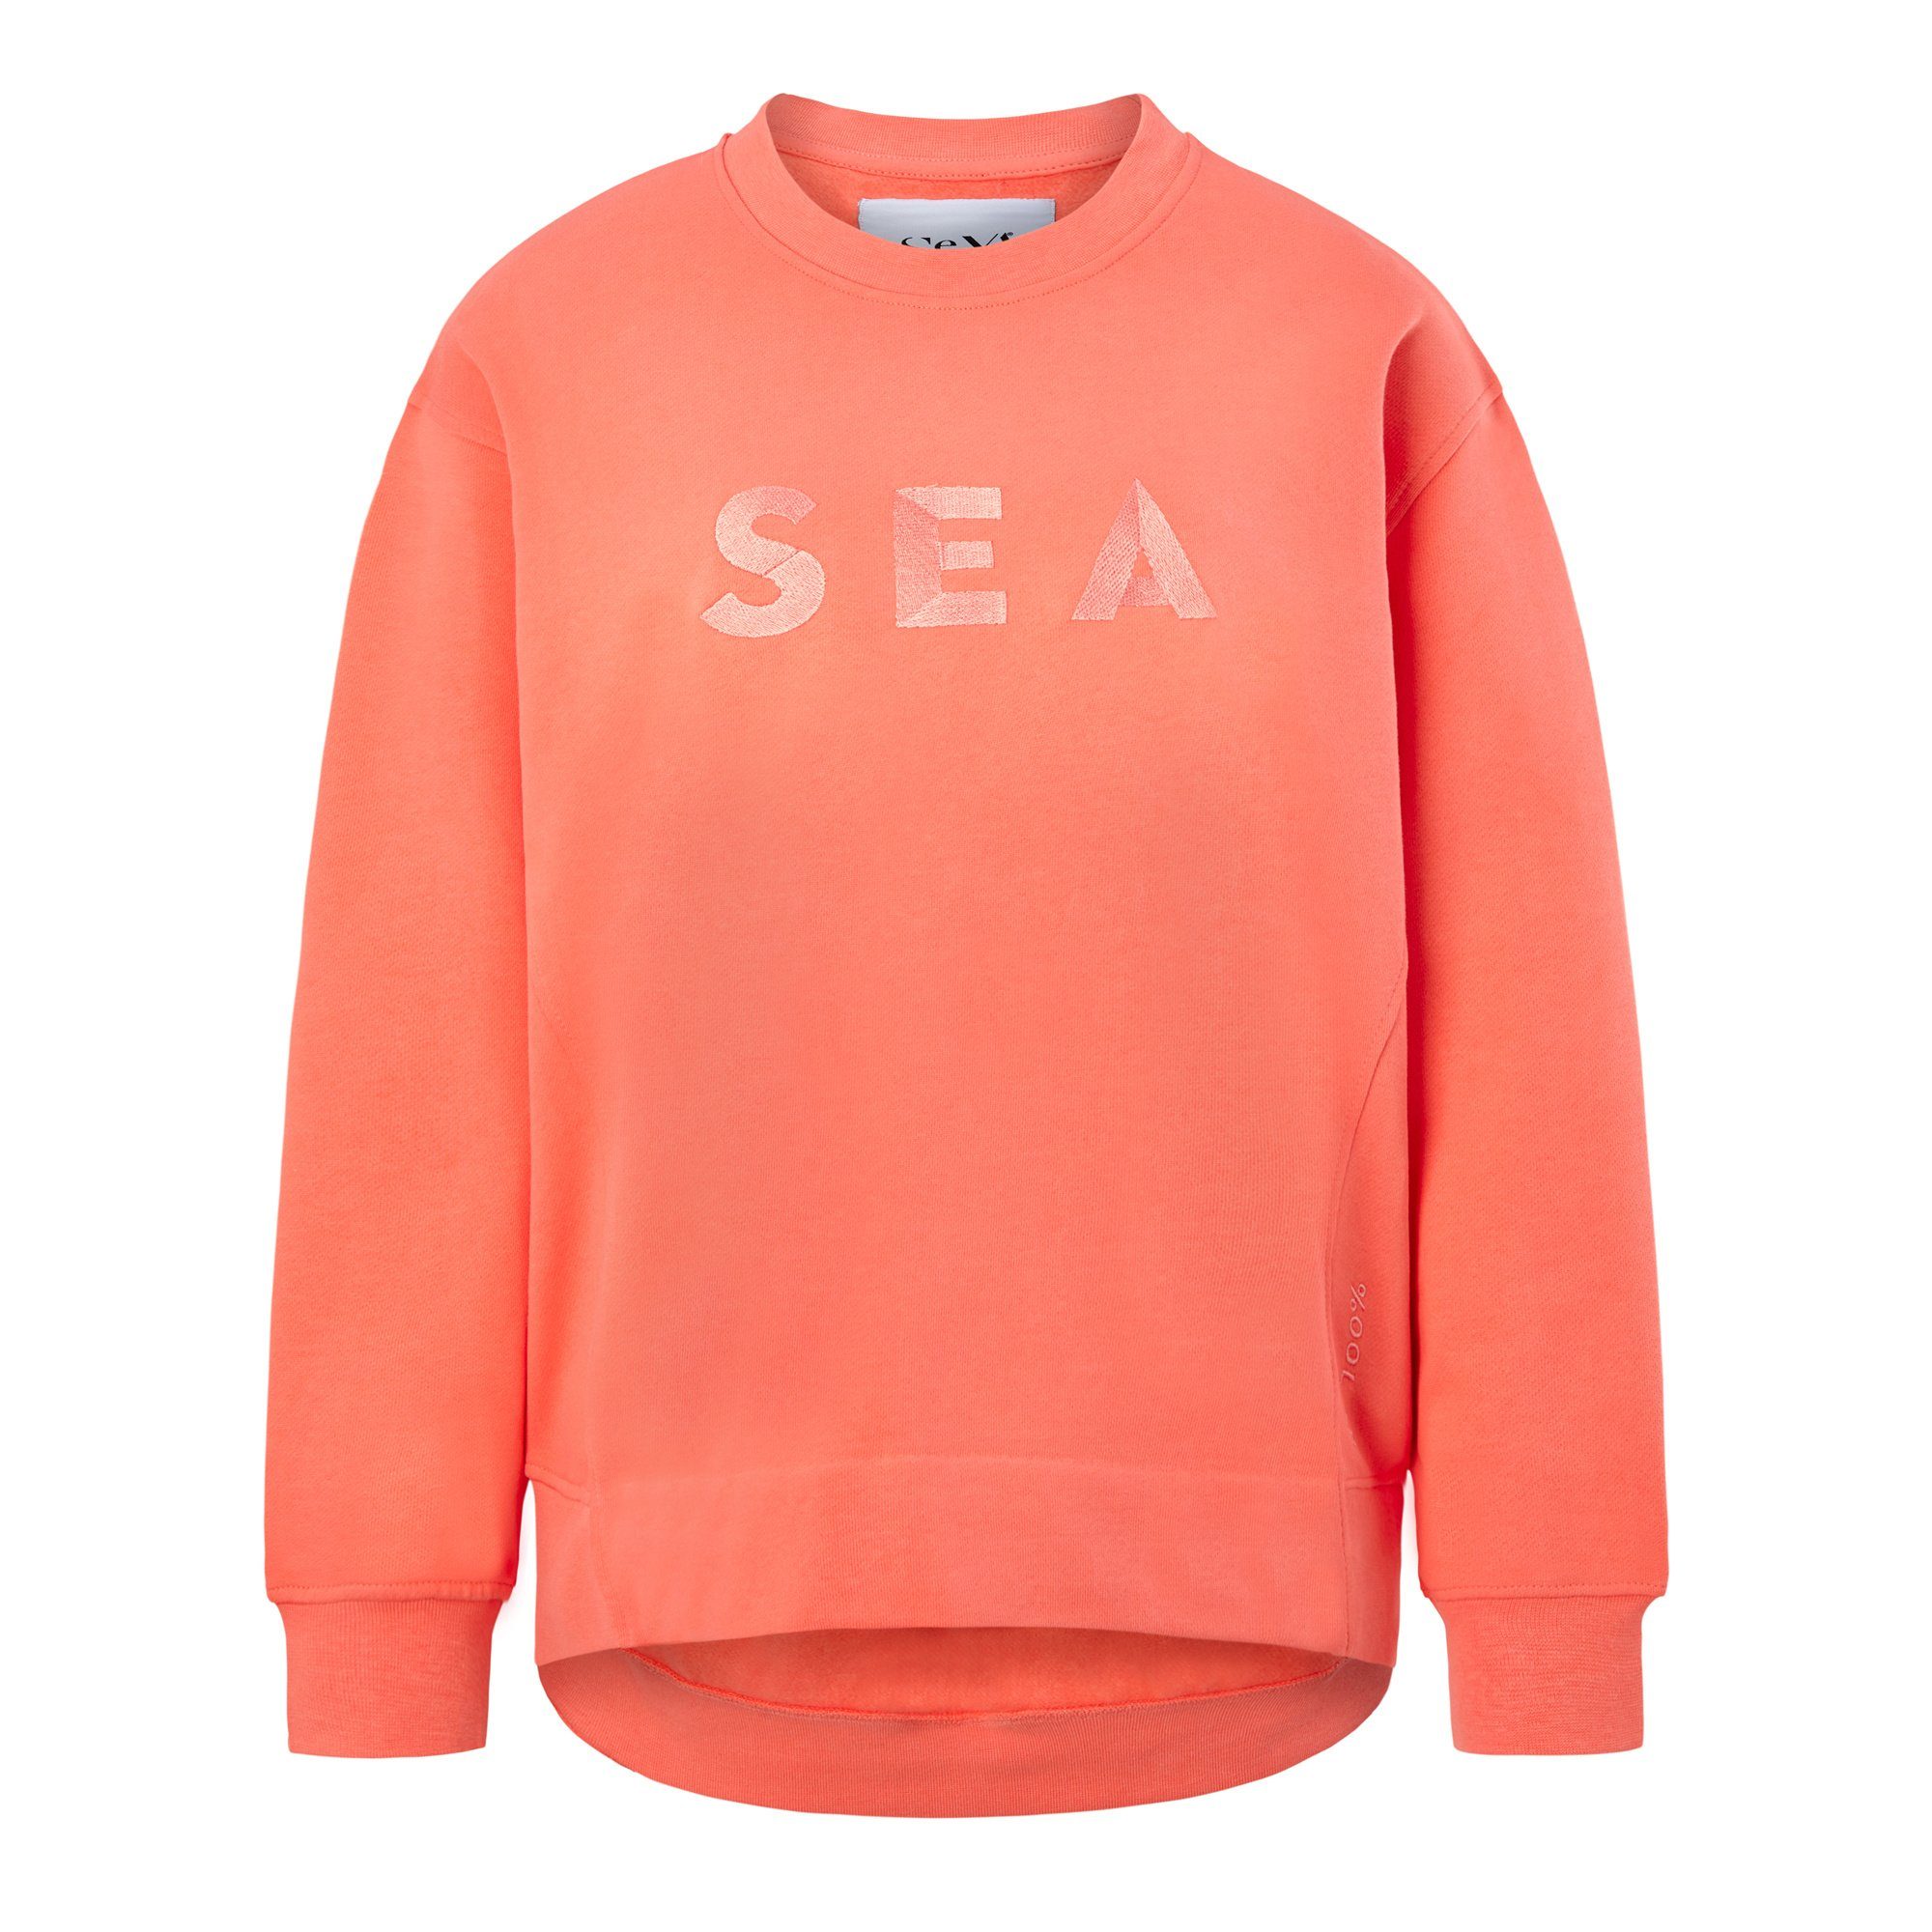 SeaYA Sweatshirt Sweatshirt koralle Biobaumwolle Stickerei